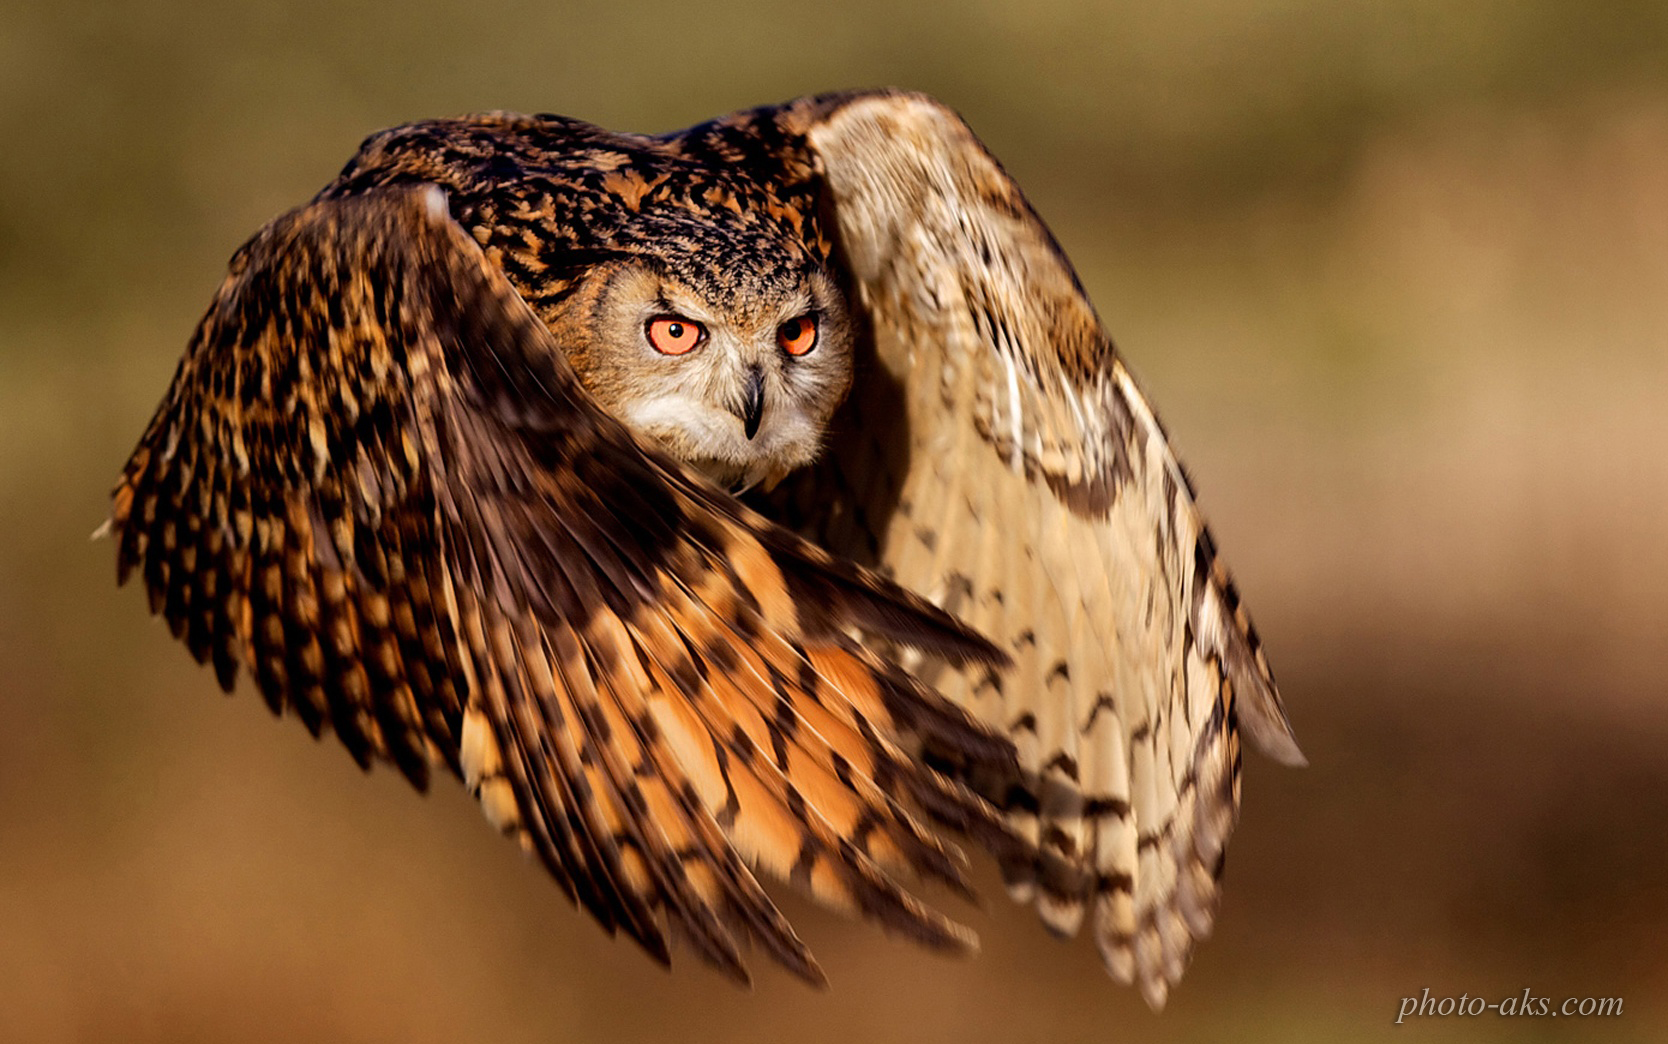 http://pic.photo-aks.com/photo/animals/bird/owl/large/owl-flying.jpg